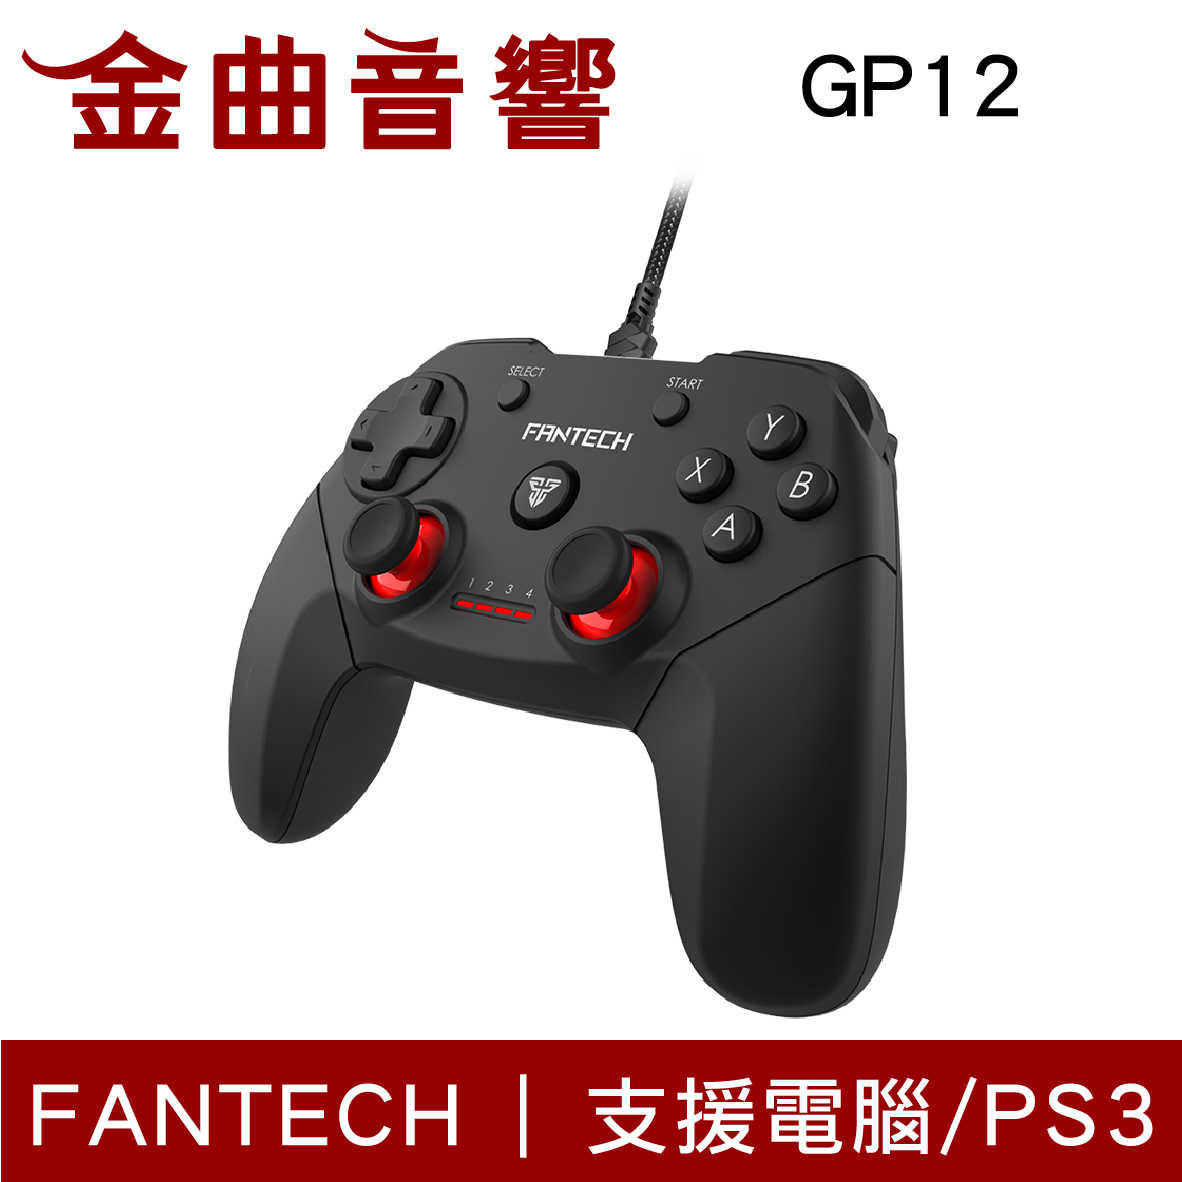 FANTECH GP12 USB 震動 適用PC/PS3 人體工學 遊戲 控制 手把 搖桿 | 金曲音響